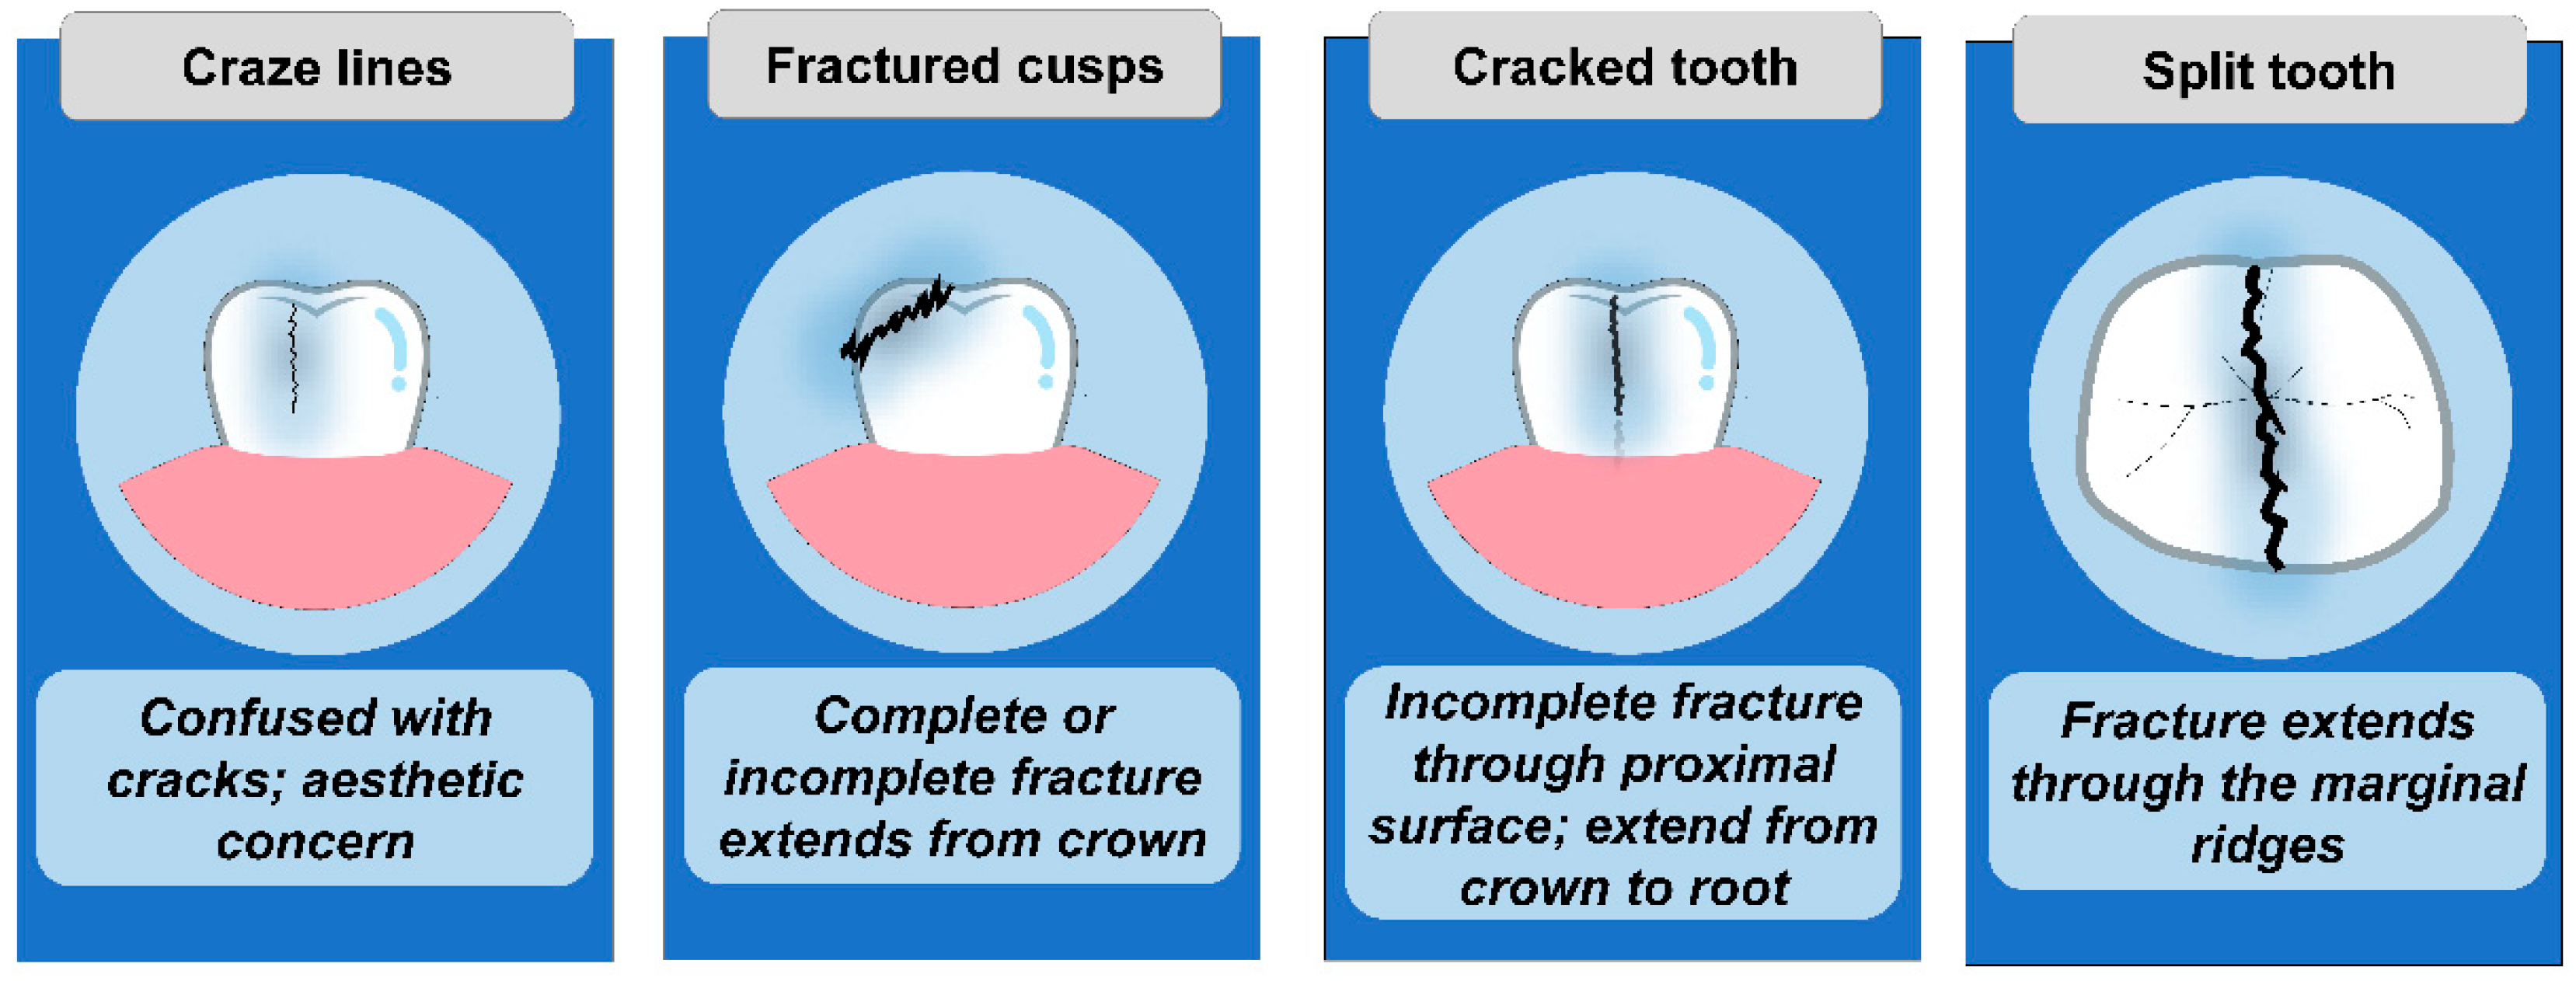 Craze Lines on Teeth: Are My Teeth Cracked?